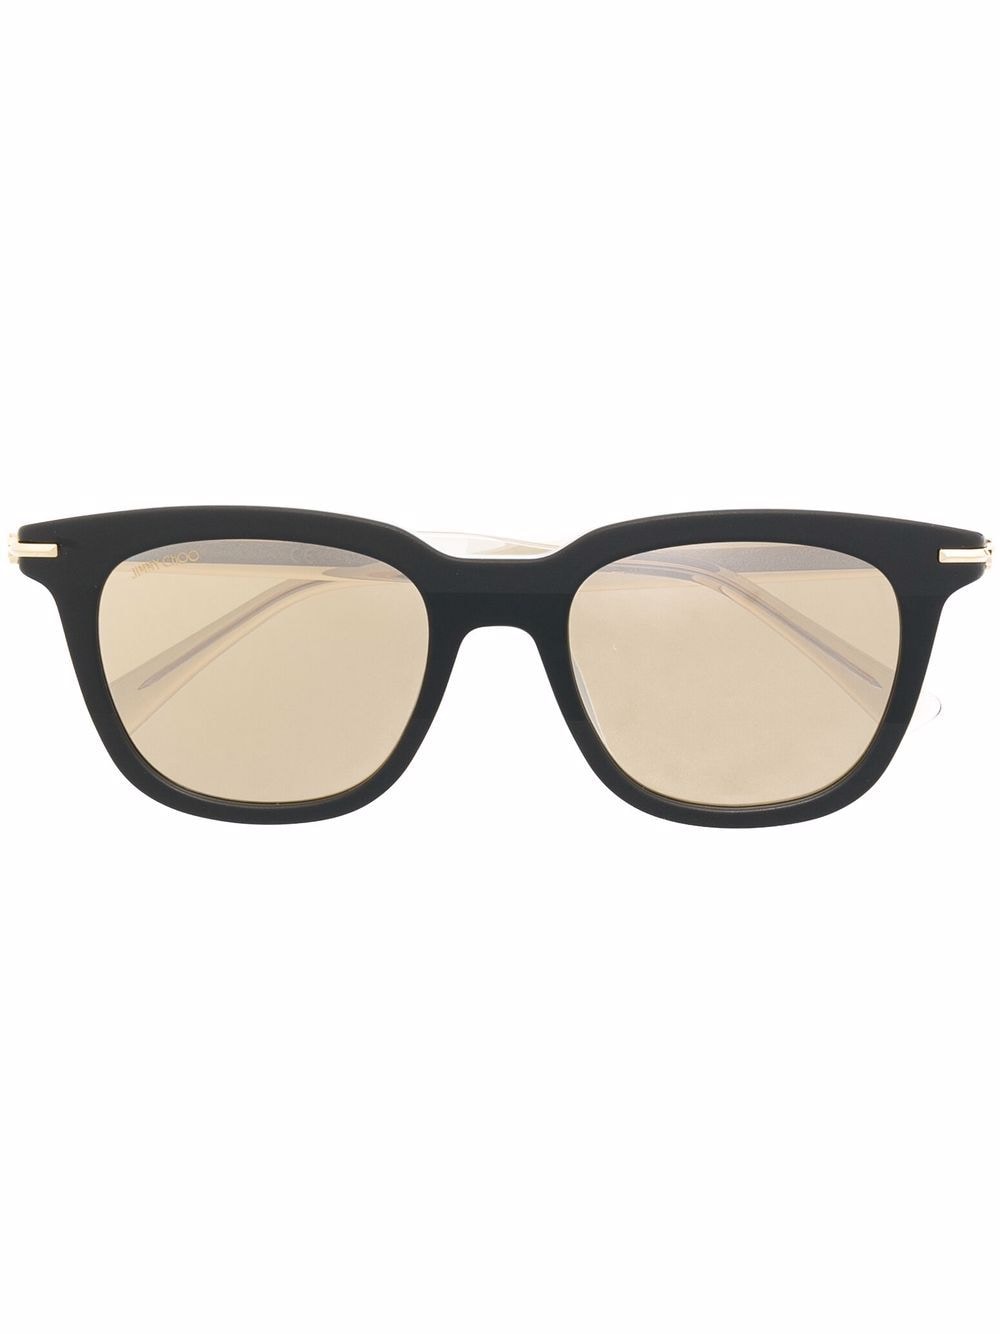 Jimmy Choo Eyewear Amos square frame sunglasses - Black von Jimmy Choo Eyewear